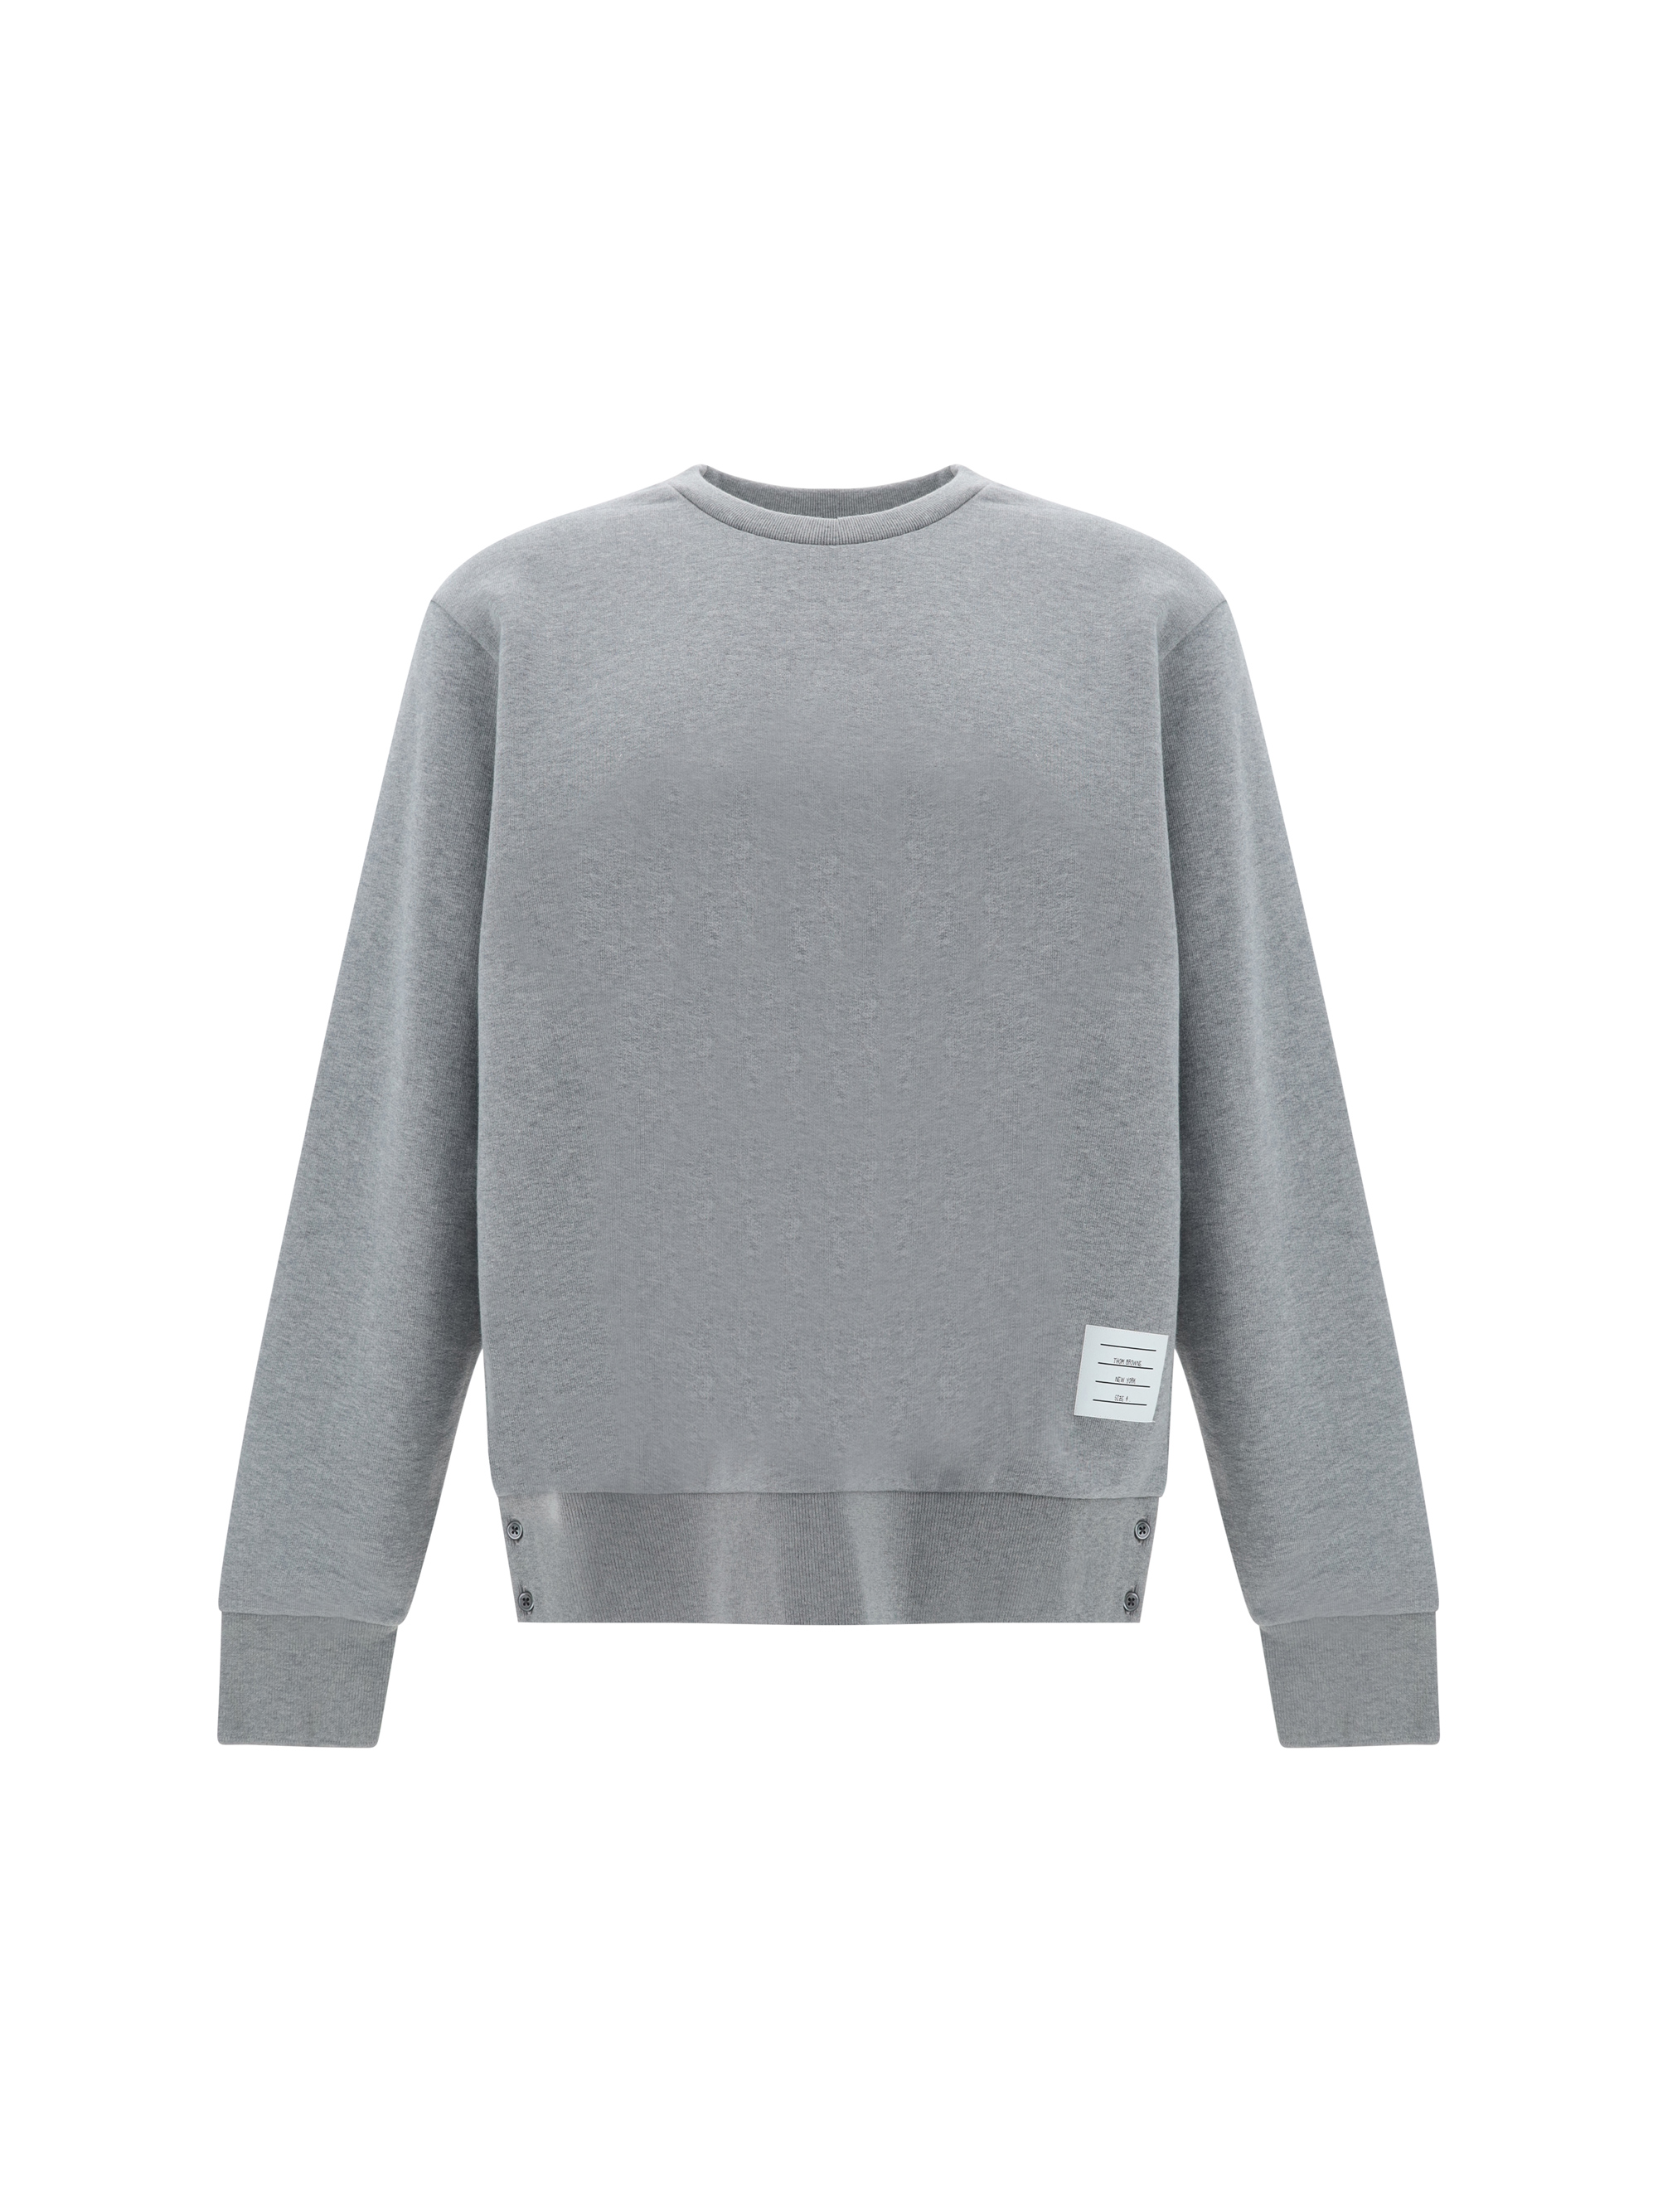 Thom Browne Sweater In Pastel Grey